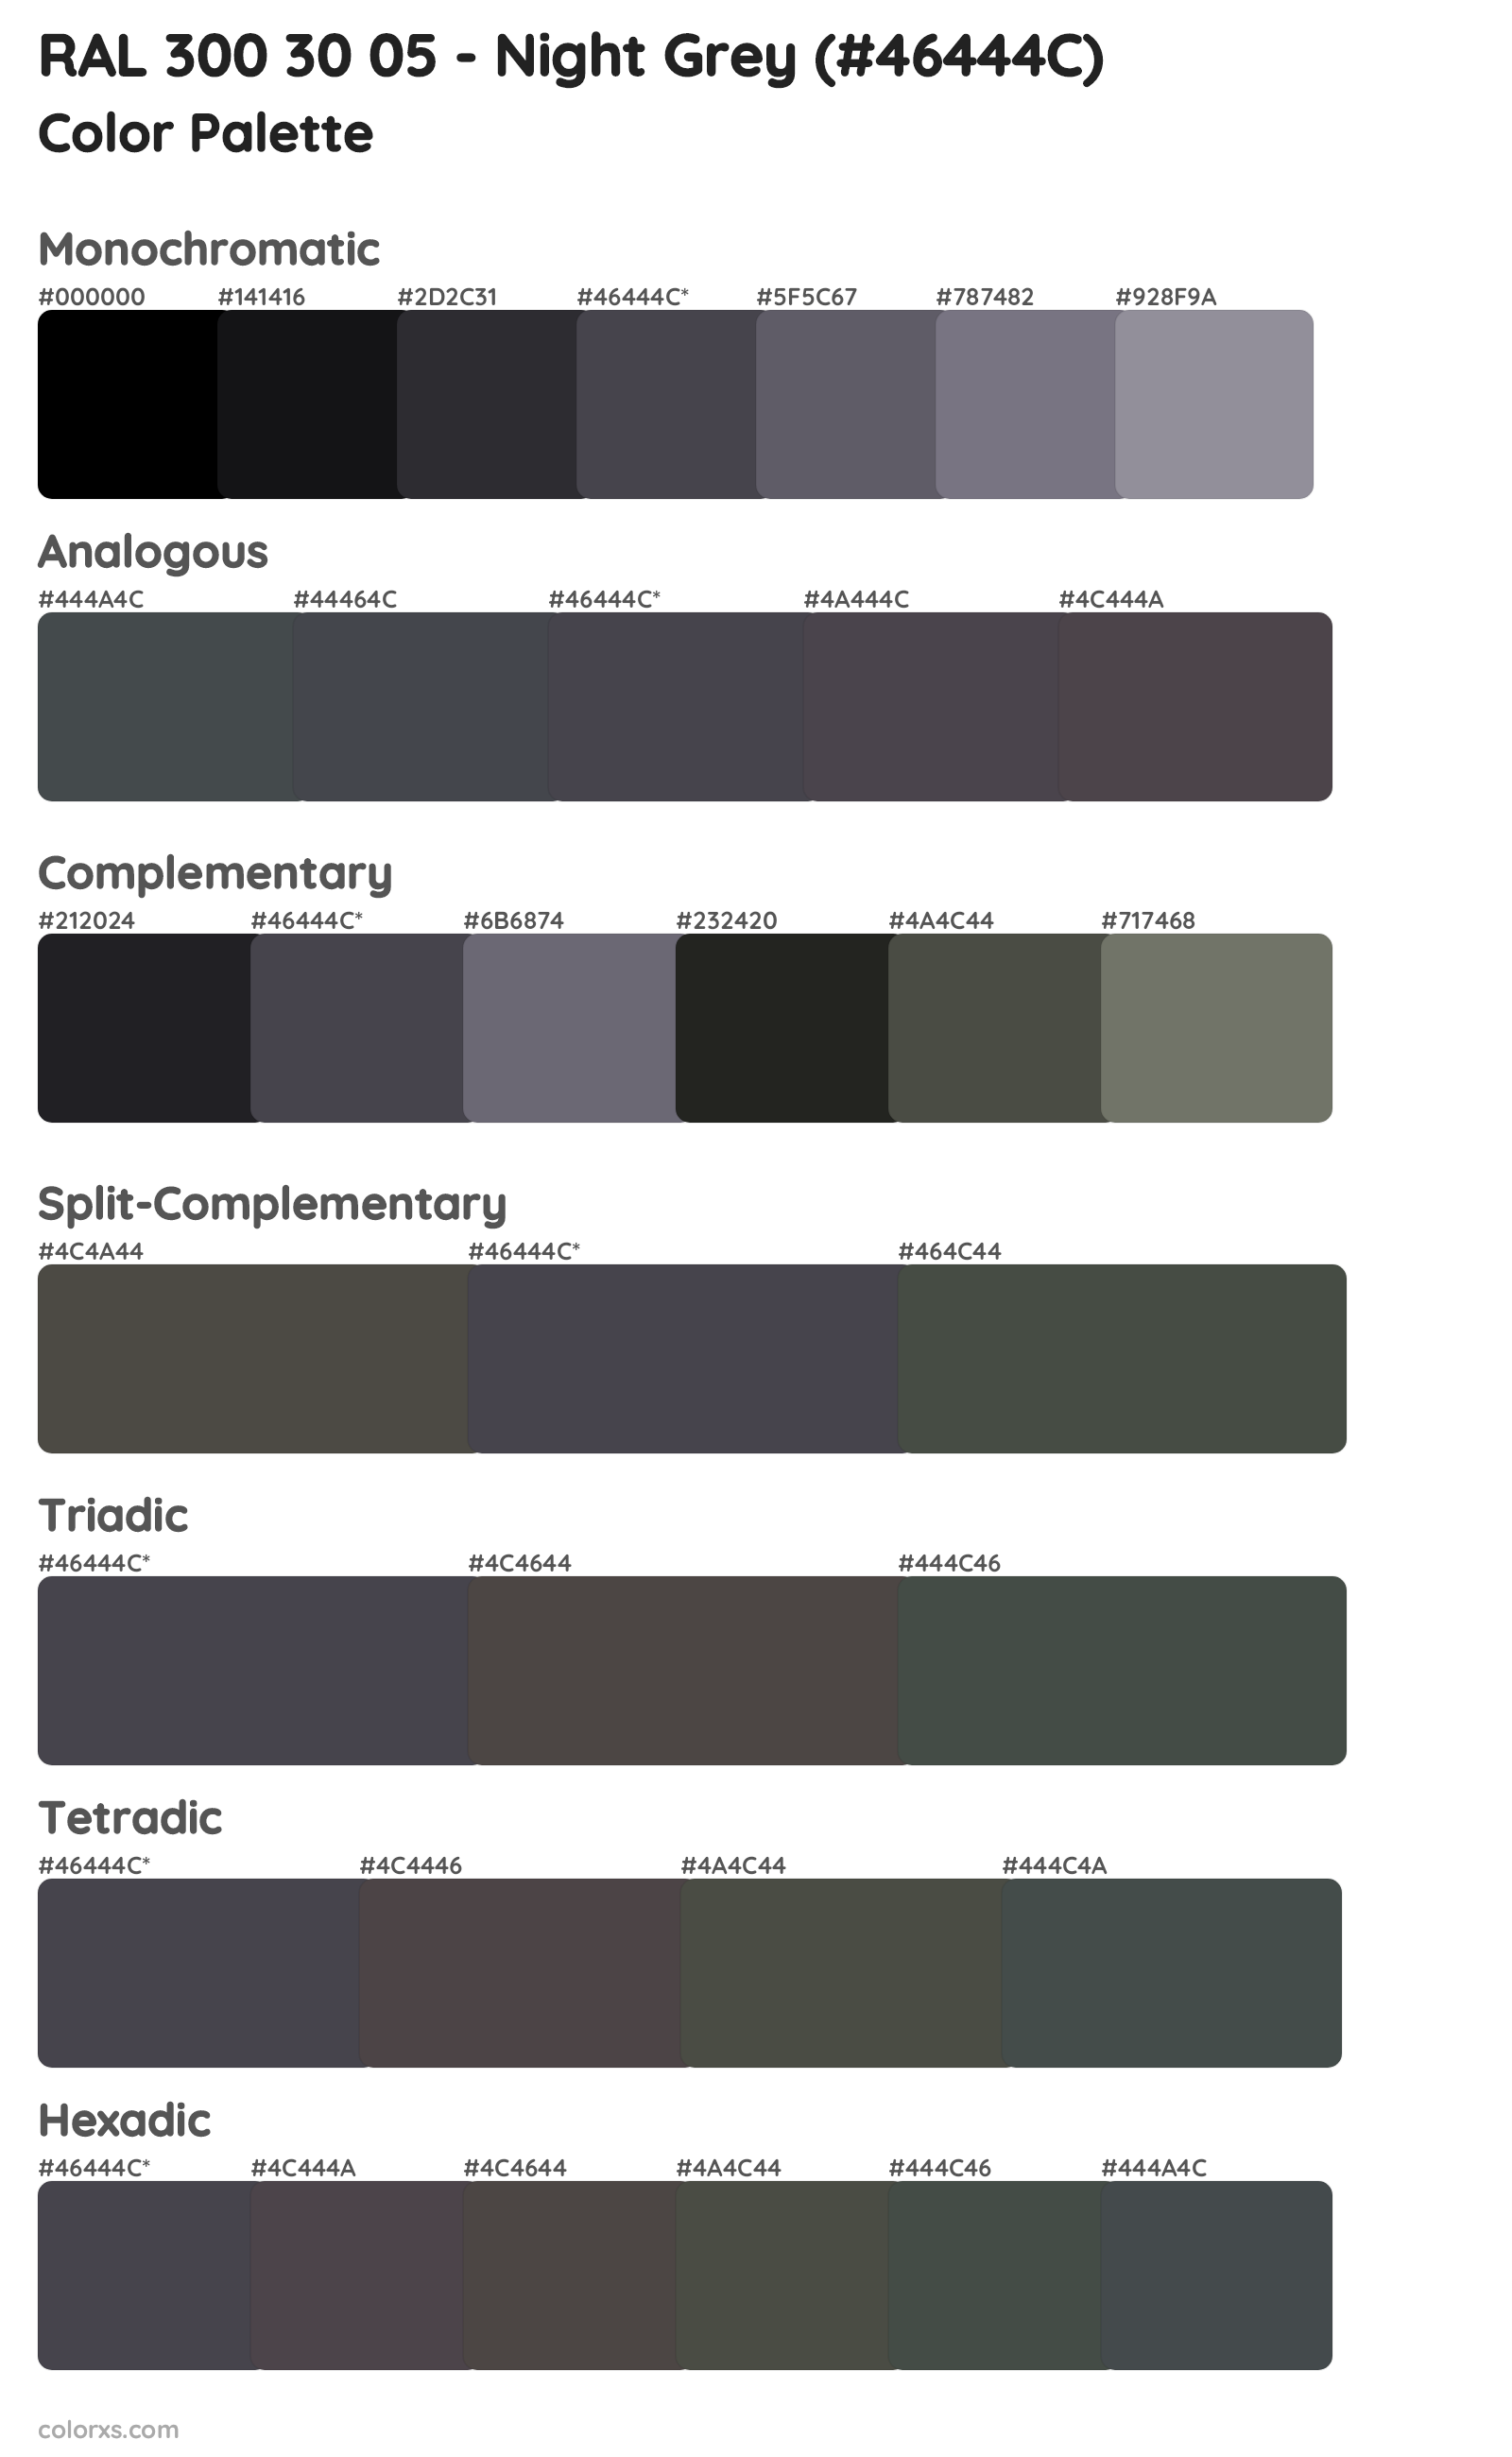 RAL 300 30 05 - Night Grey Color Scheme Palettes